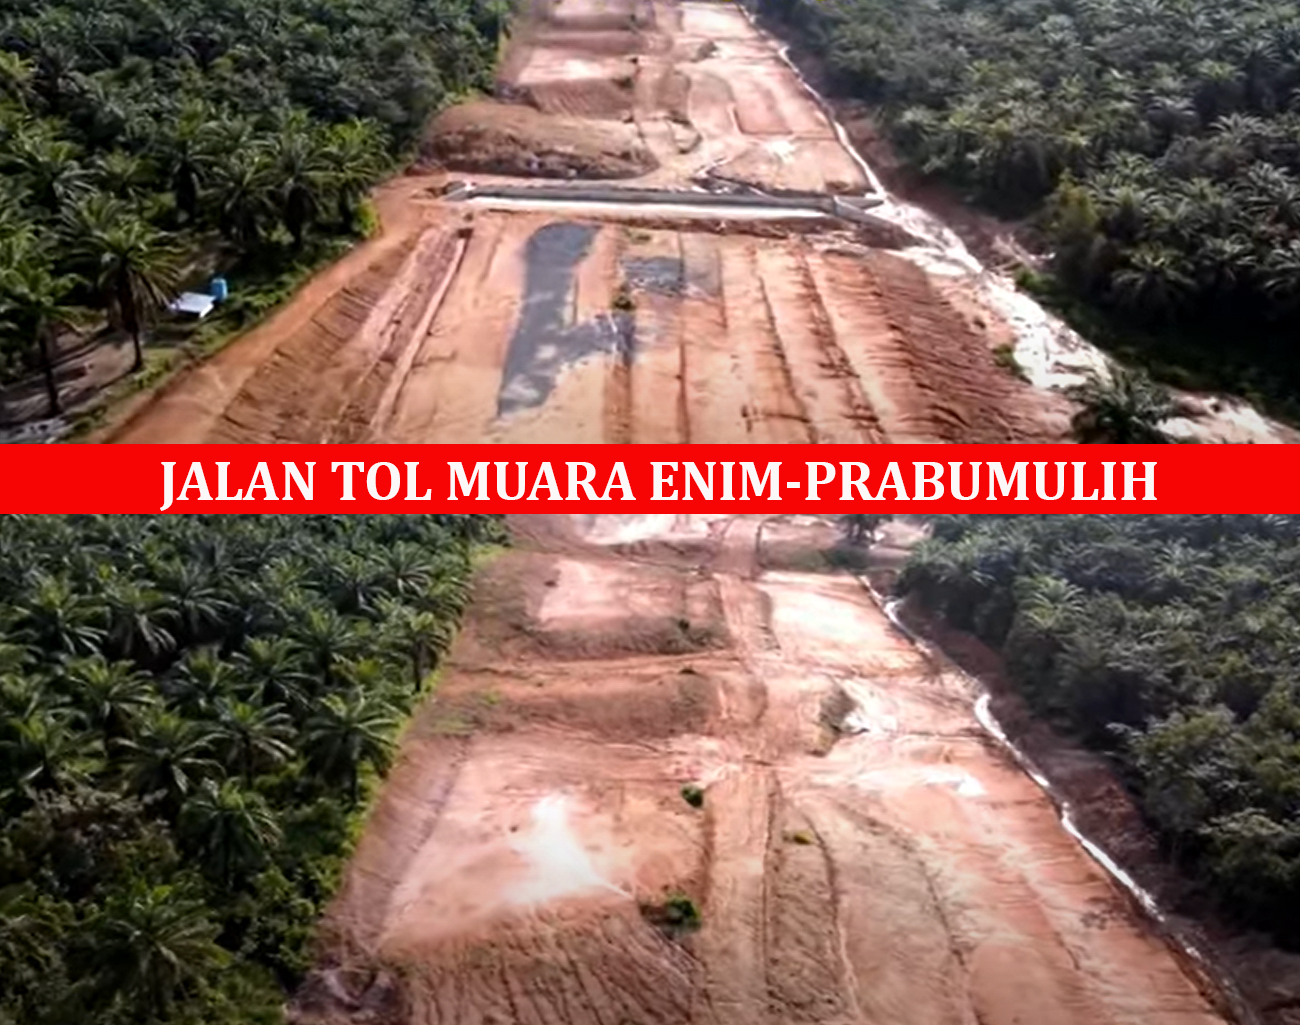 Inilah Nilai Investasi Pembangunan Jalan Tol Muara Enim-Prabumulih Akses Penting Pulau Sumatera 